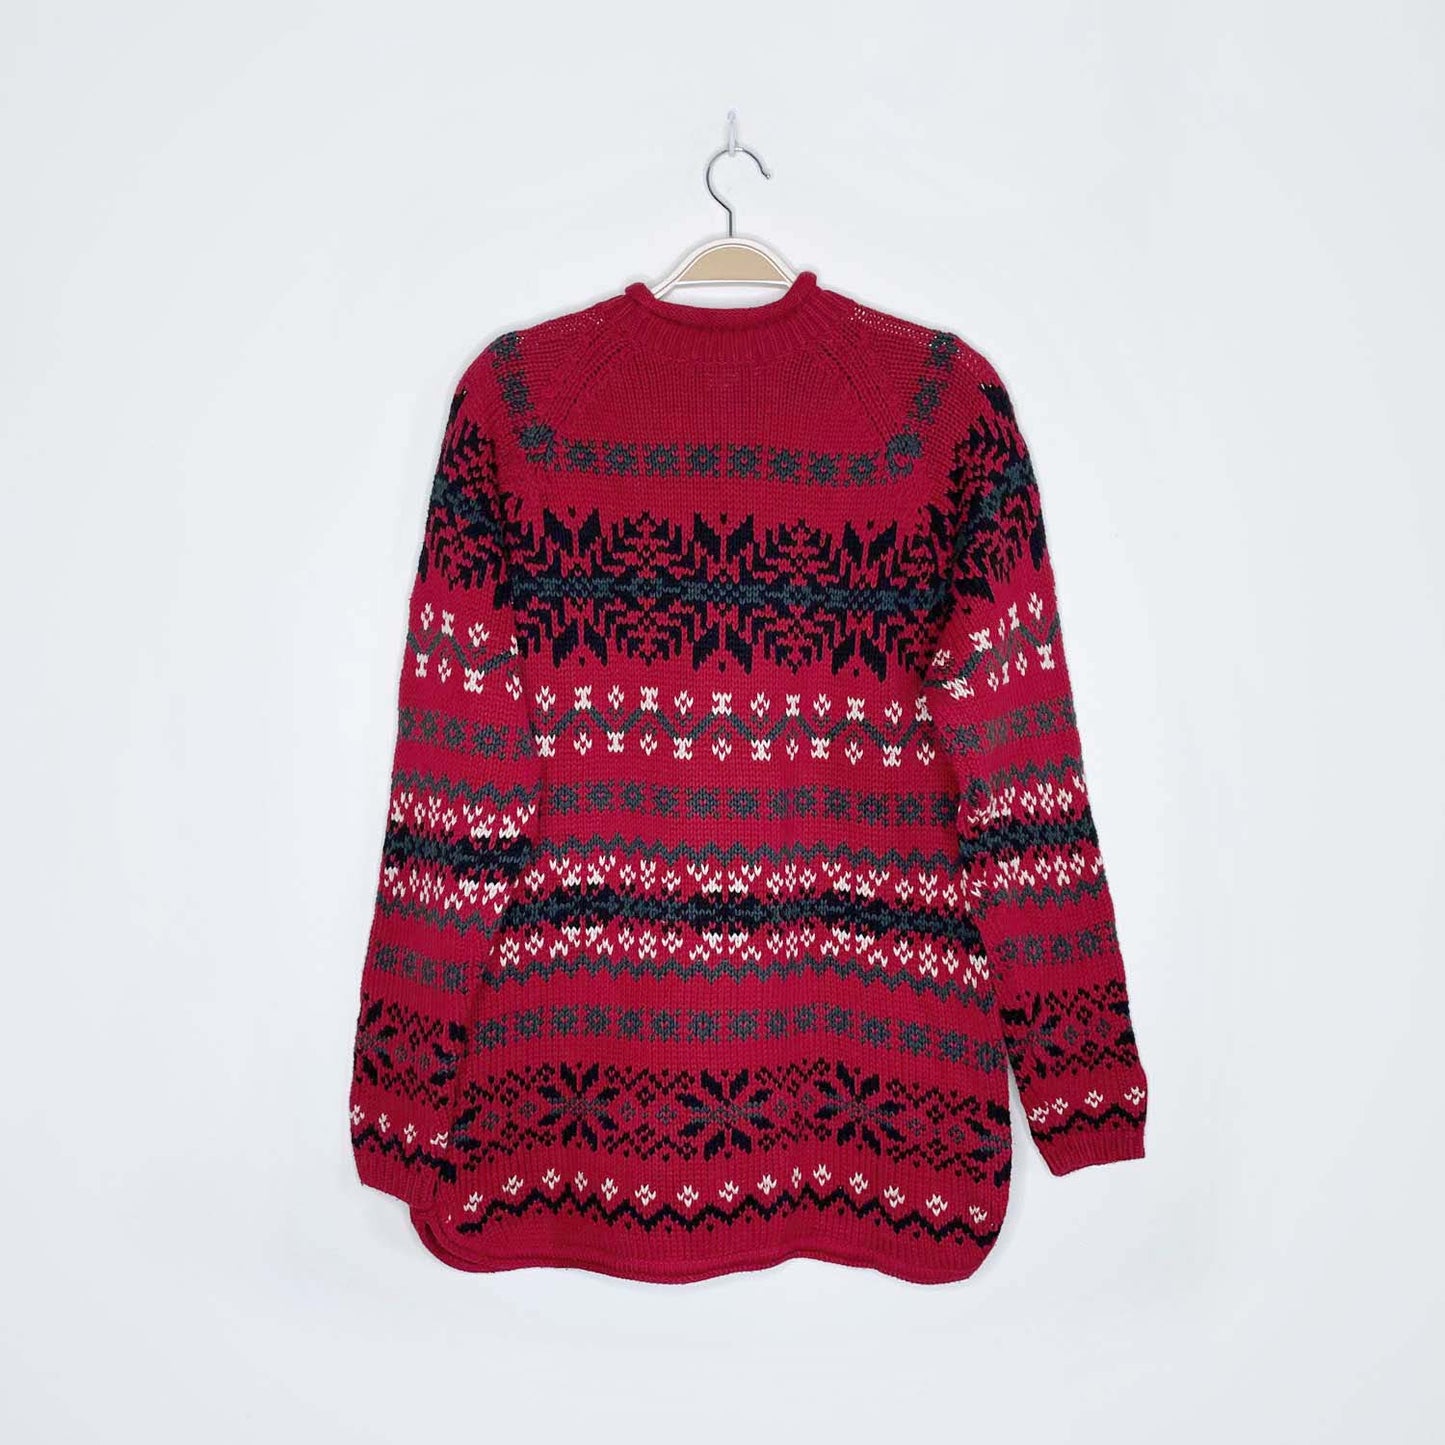 vintage eddie bauer nordic snowflake knit sweater - size small